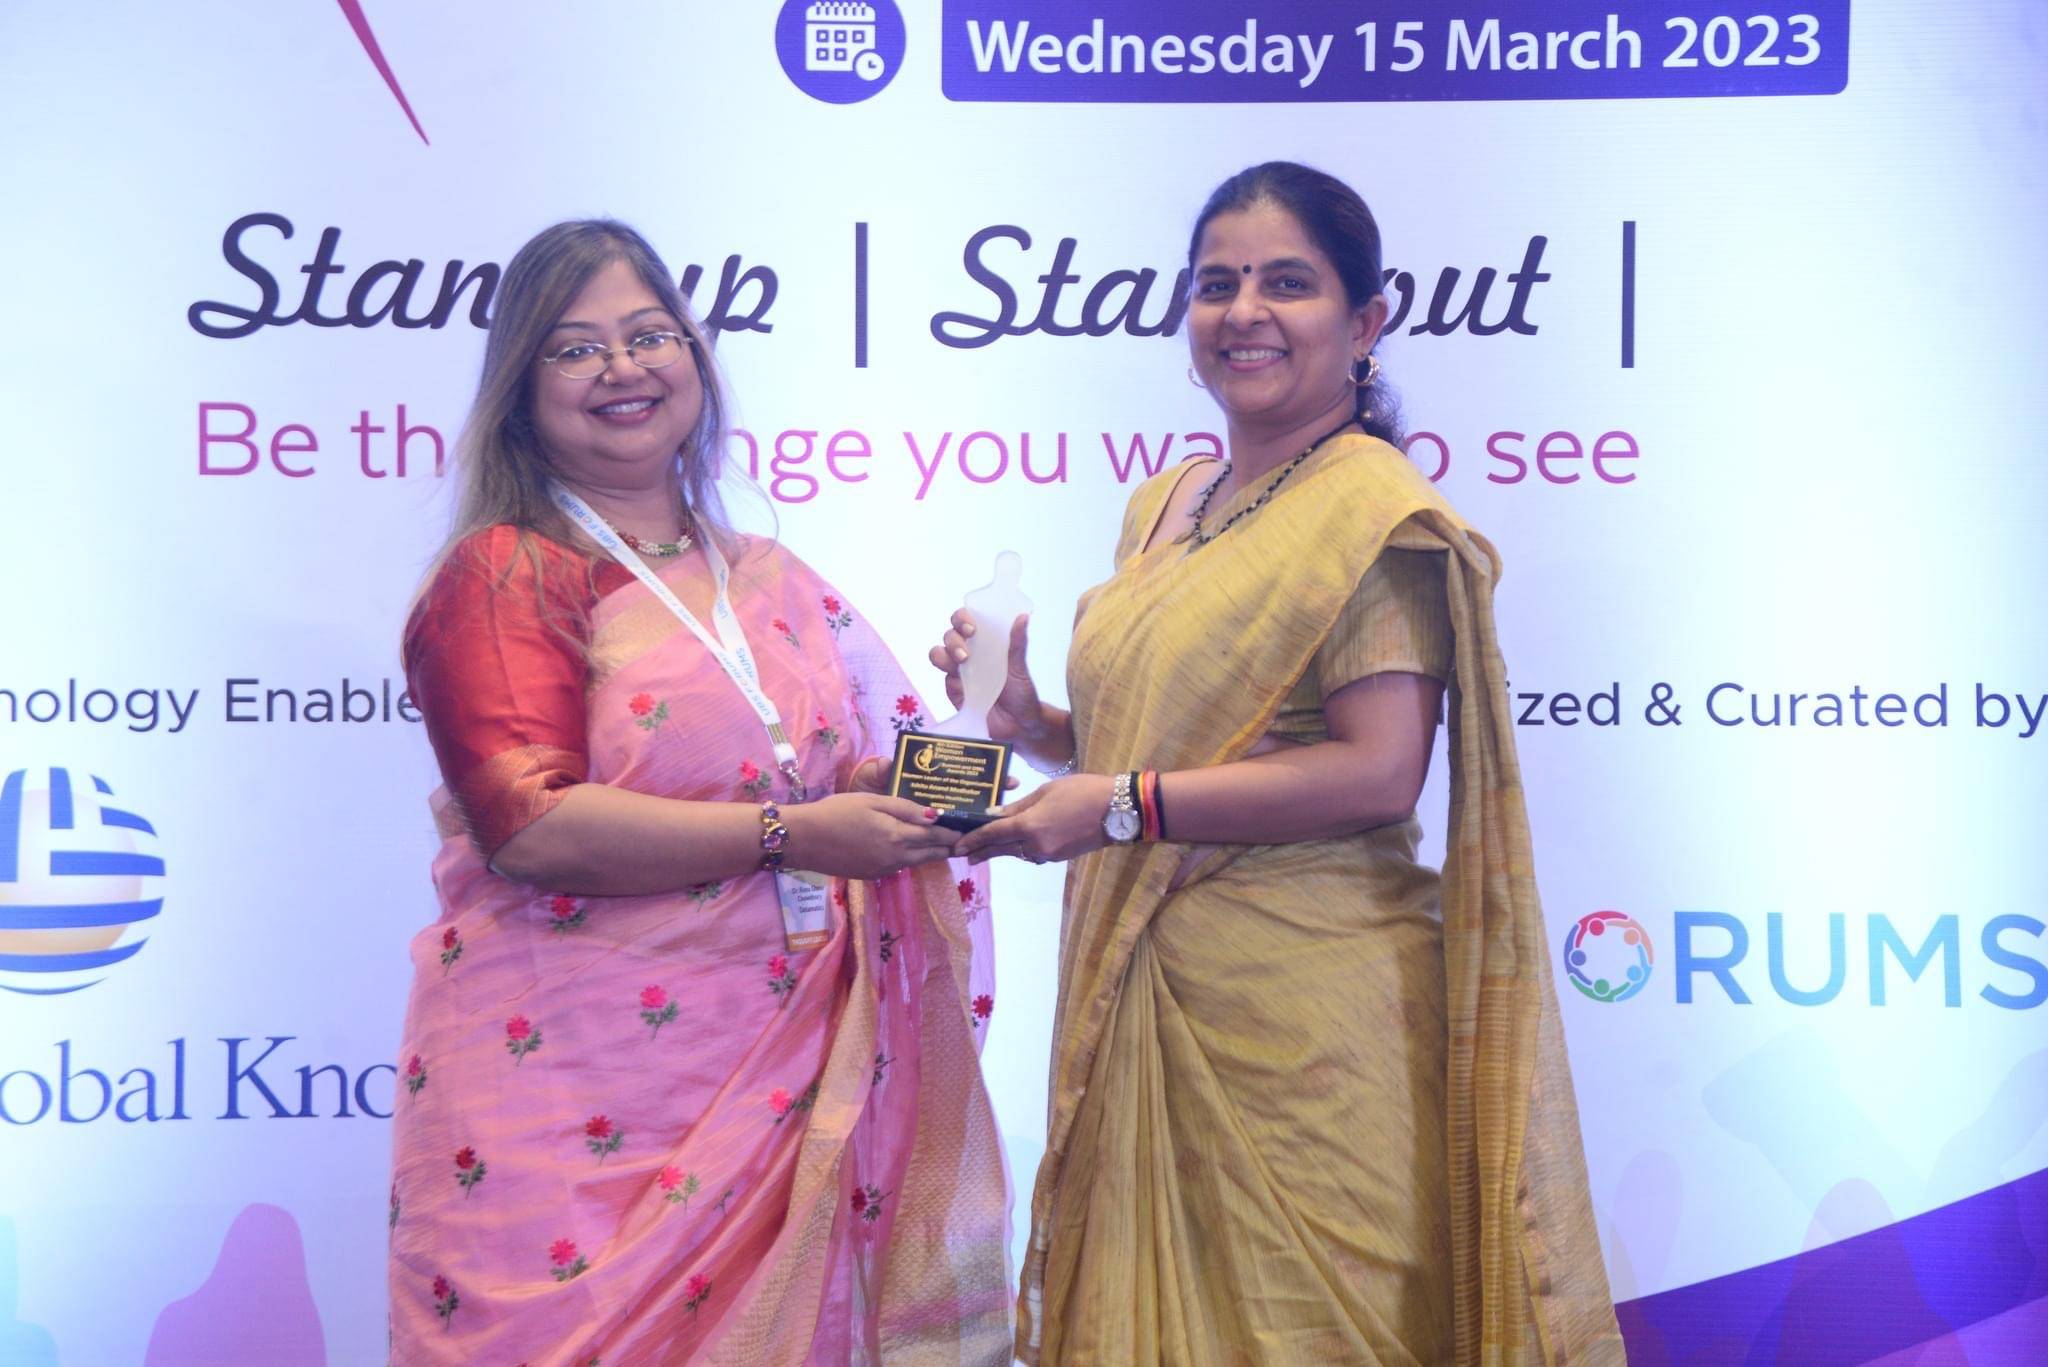 CHRO Ms. Ishita Medhekar bags the “Woman Leader of the Organization” Award